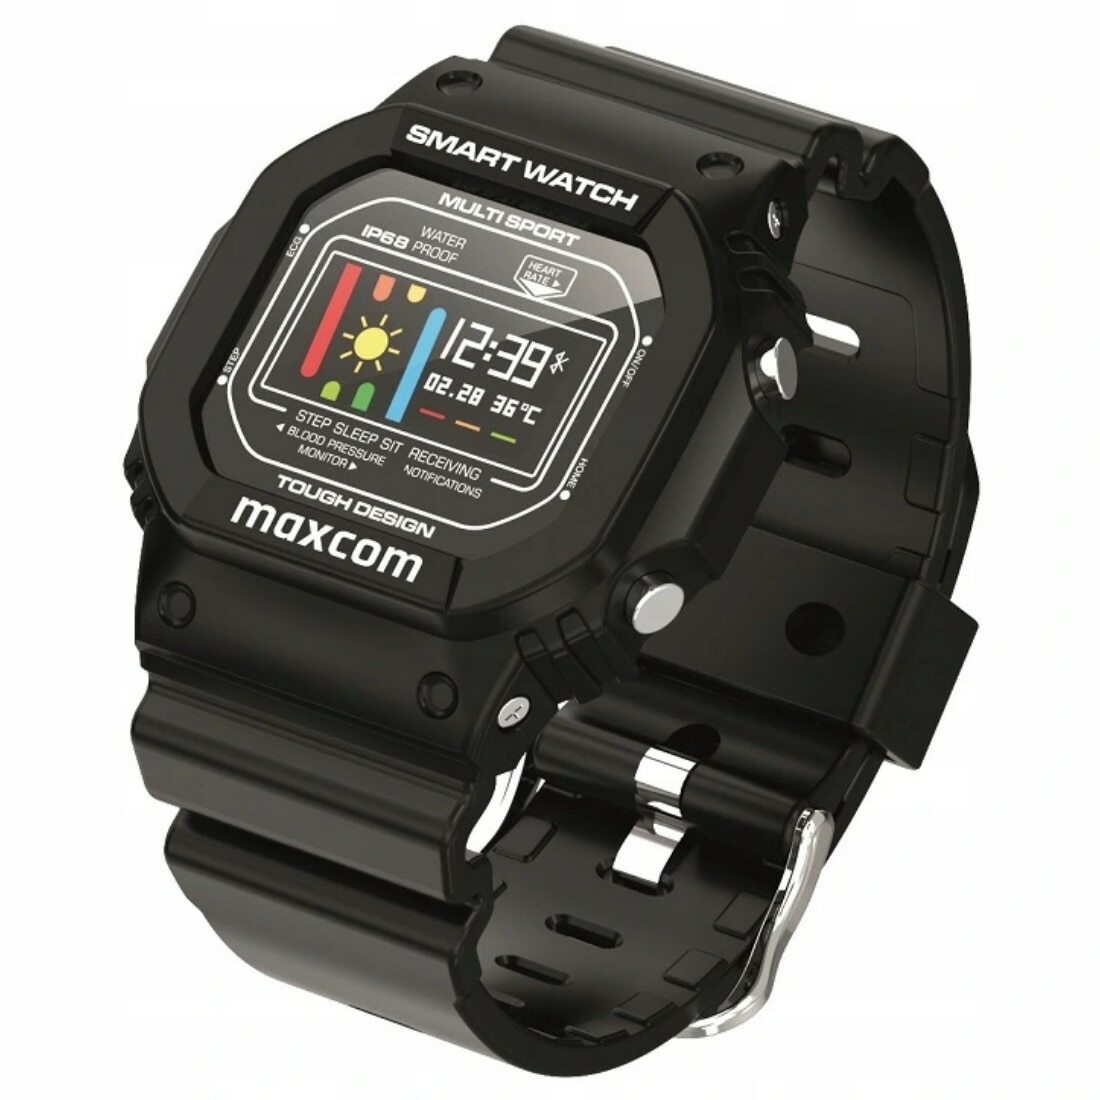 MAXCOM Watch Fit FW22 CLASSIC /